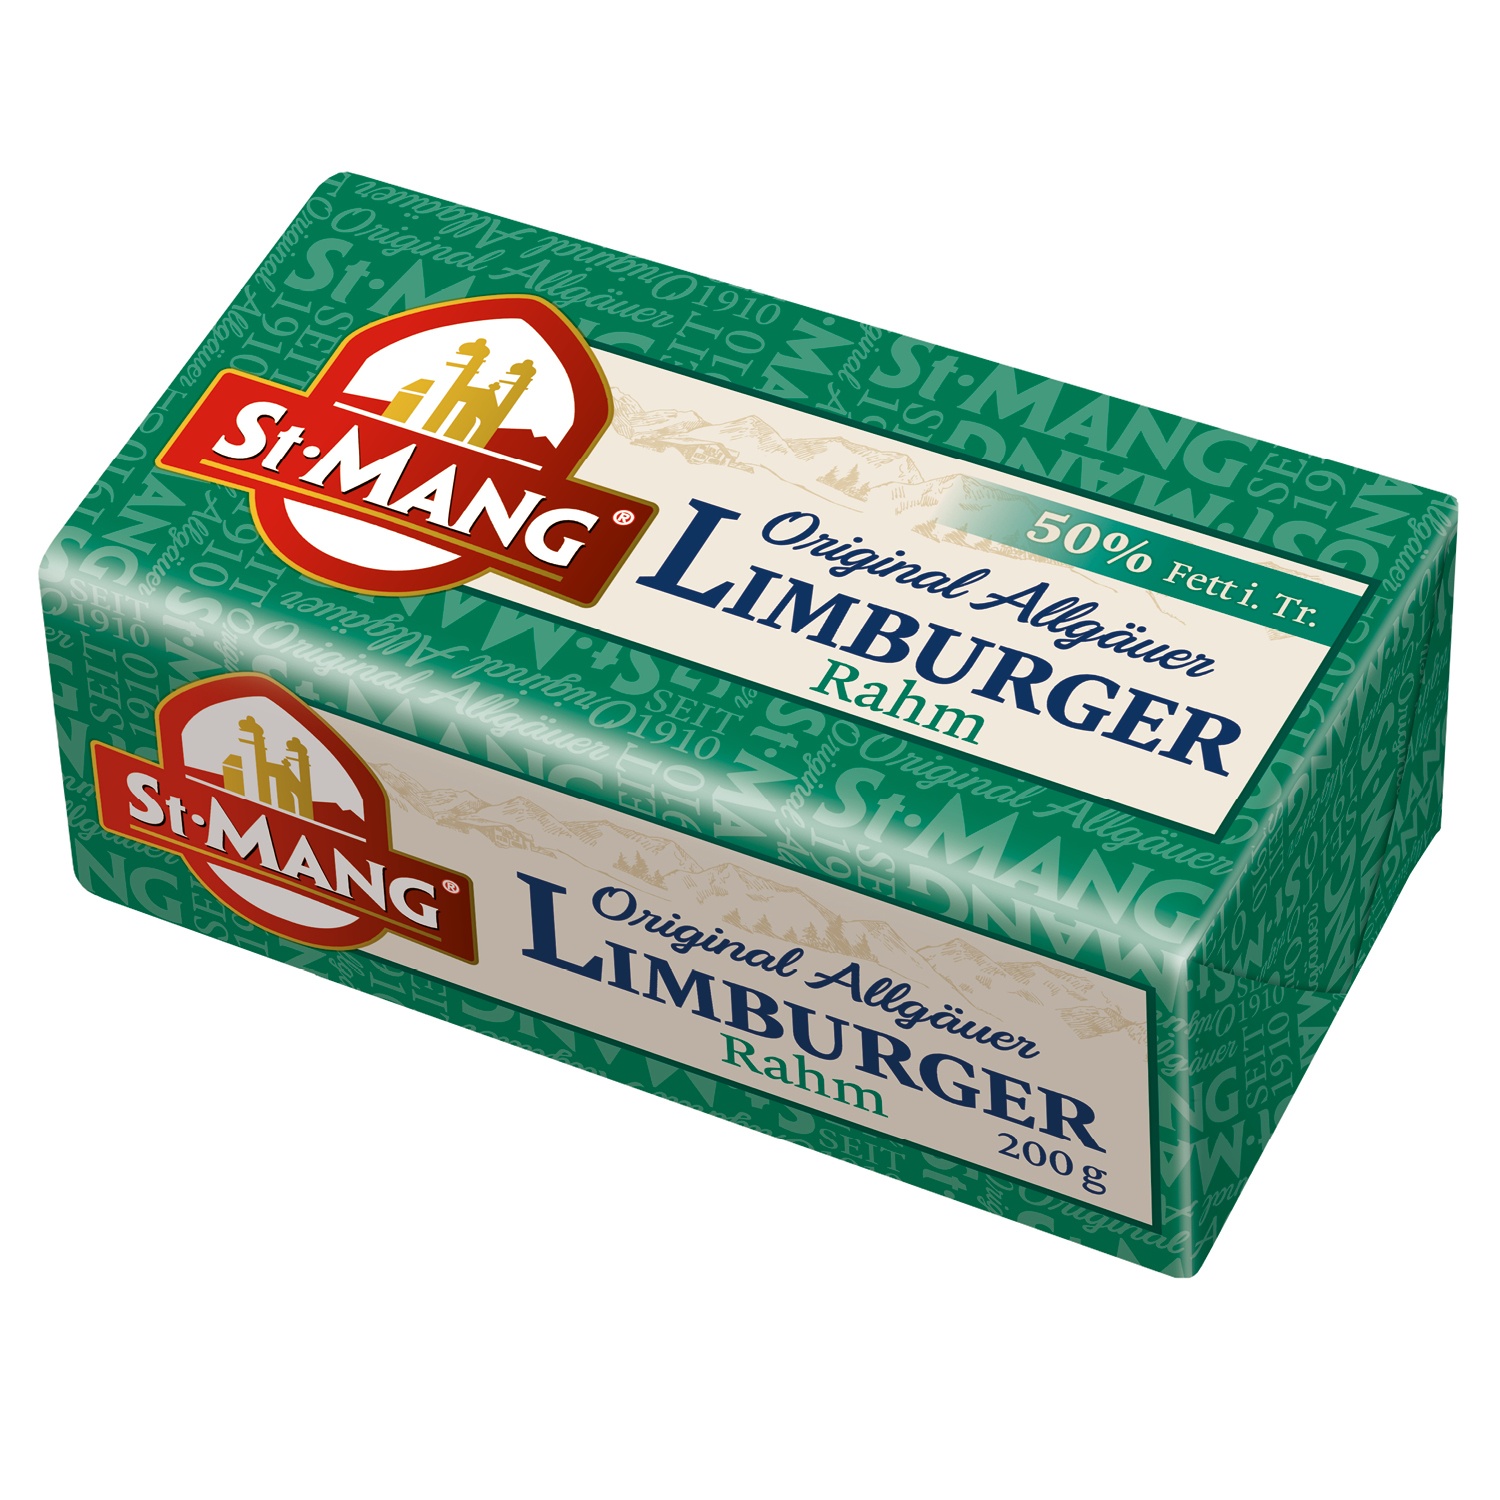 ST. MANG® Original Allgäuer Käsespezialität 200 g